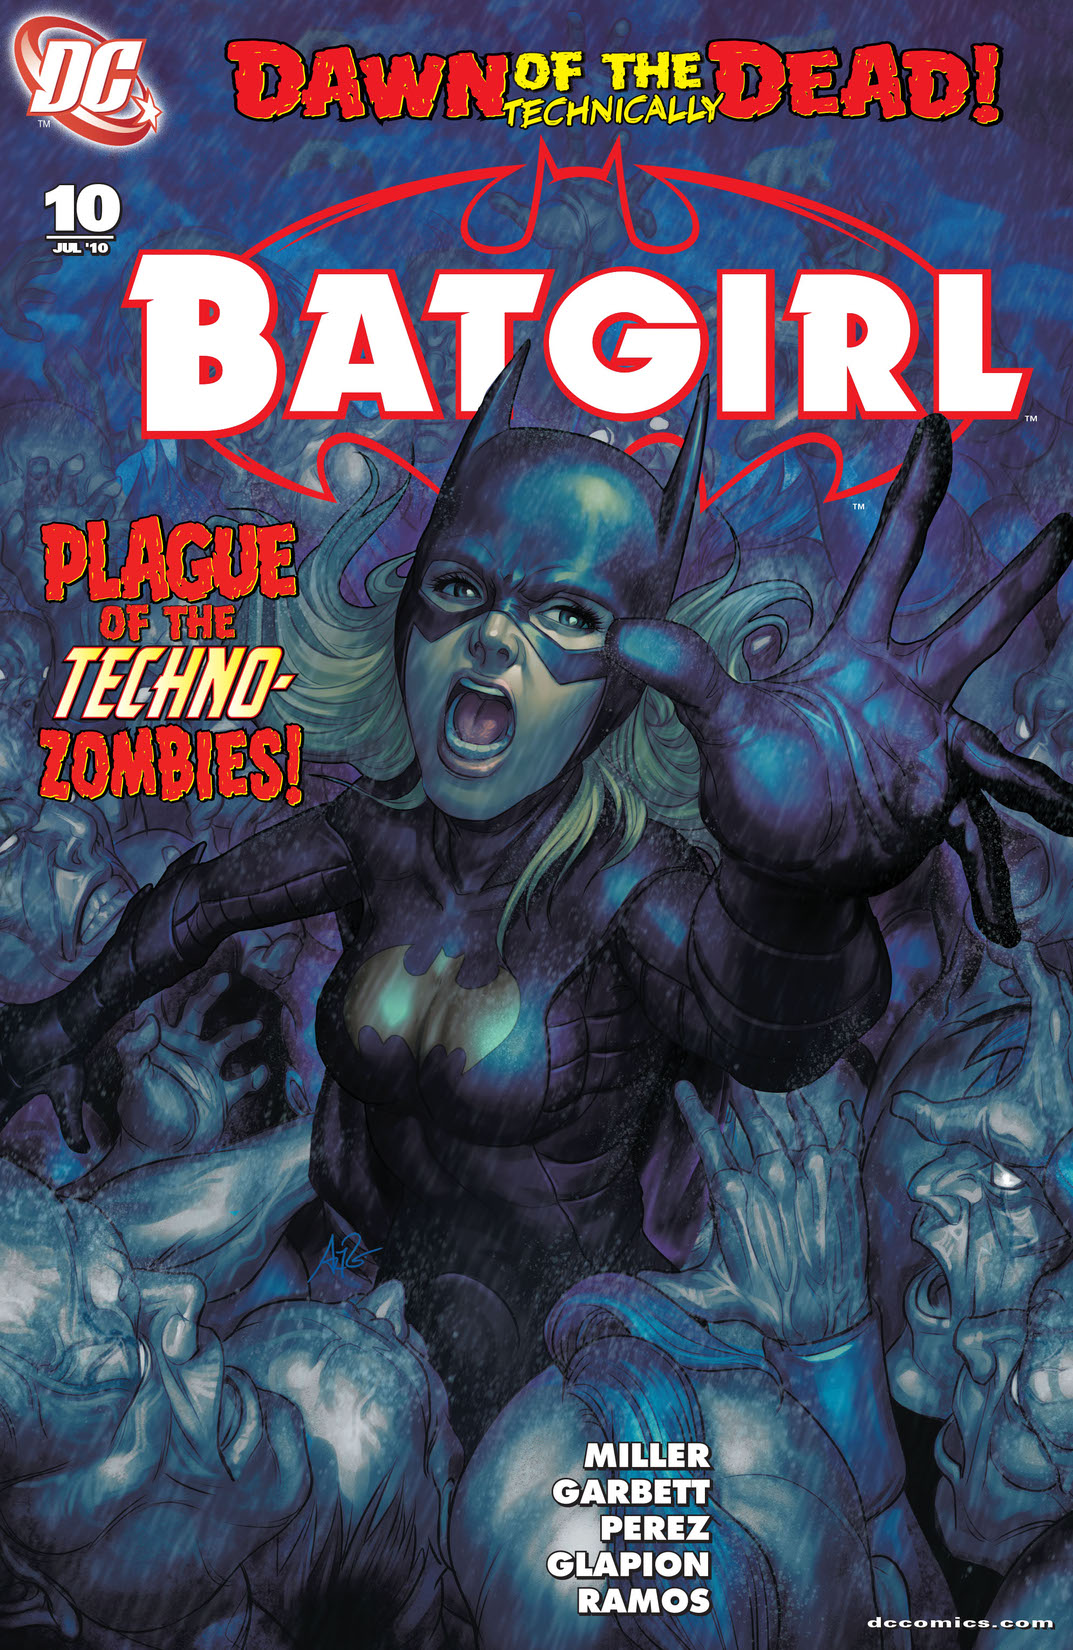 Batgirl (2009-) #10 preview images